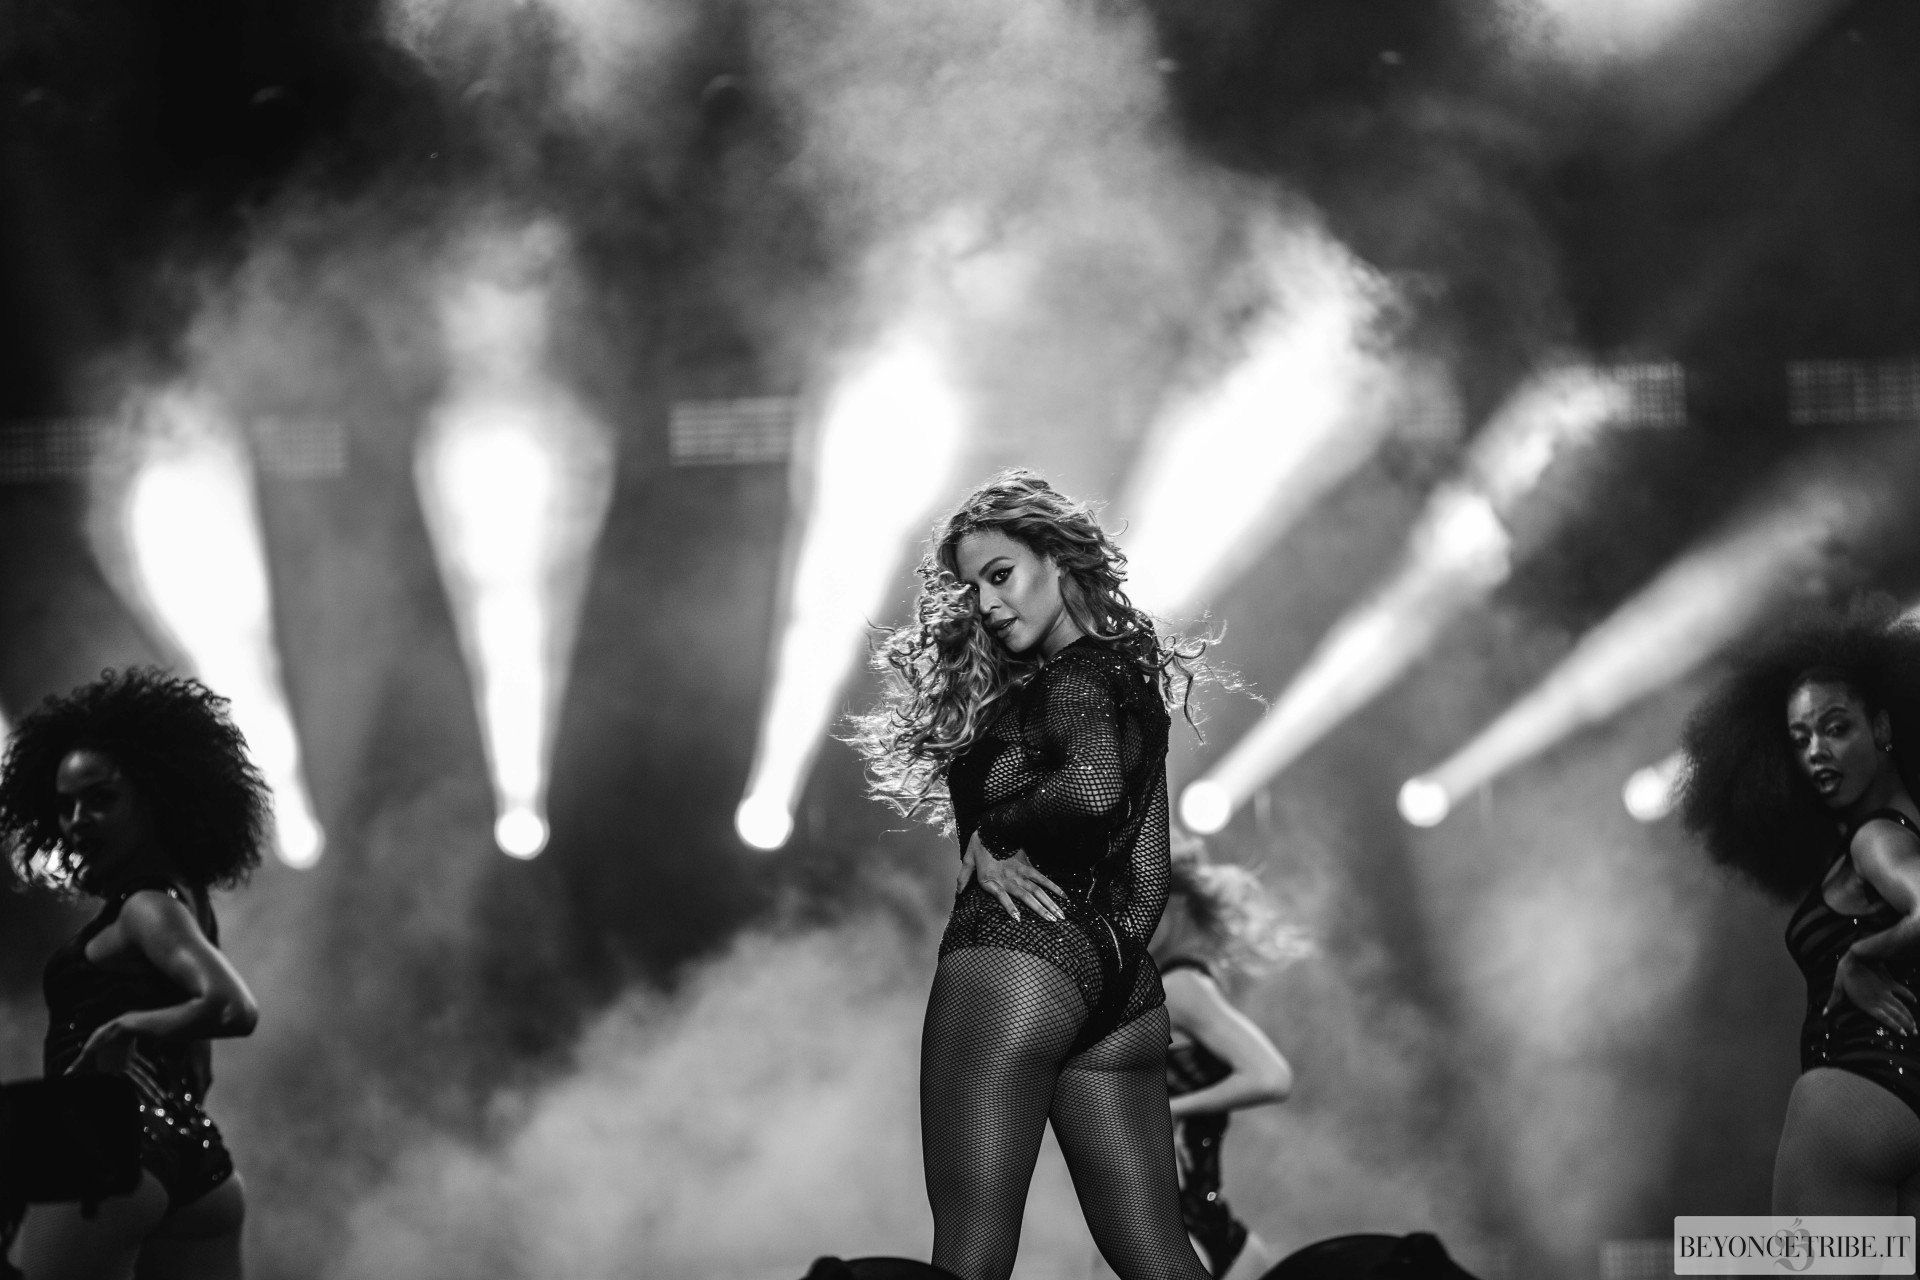 Beyonce crowd surf